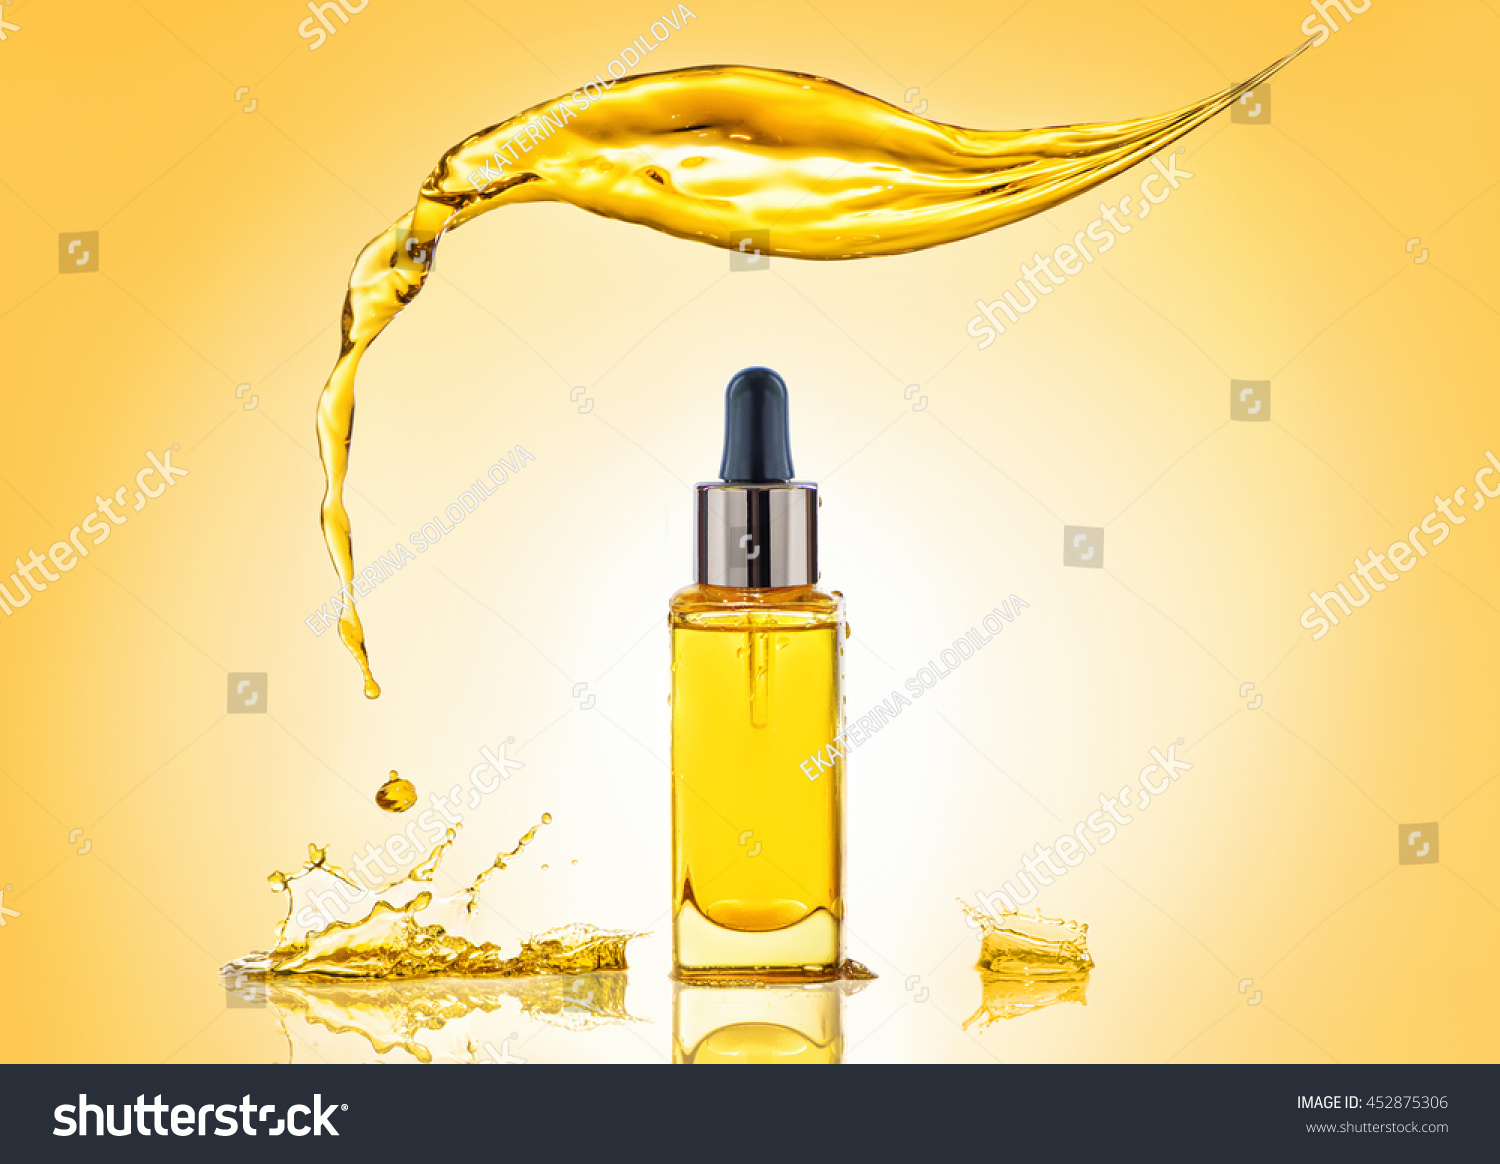 Download Bottle Yellow Cosmetic Oil Big Splash Beauty Fashion Stock Image 452875306 Yellowimages Mockups